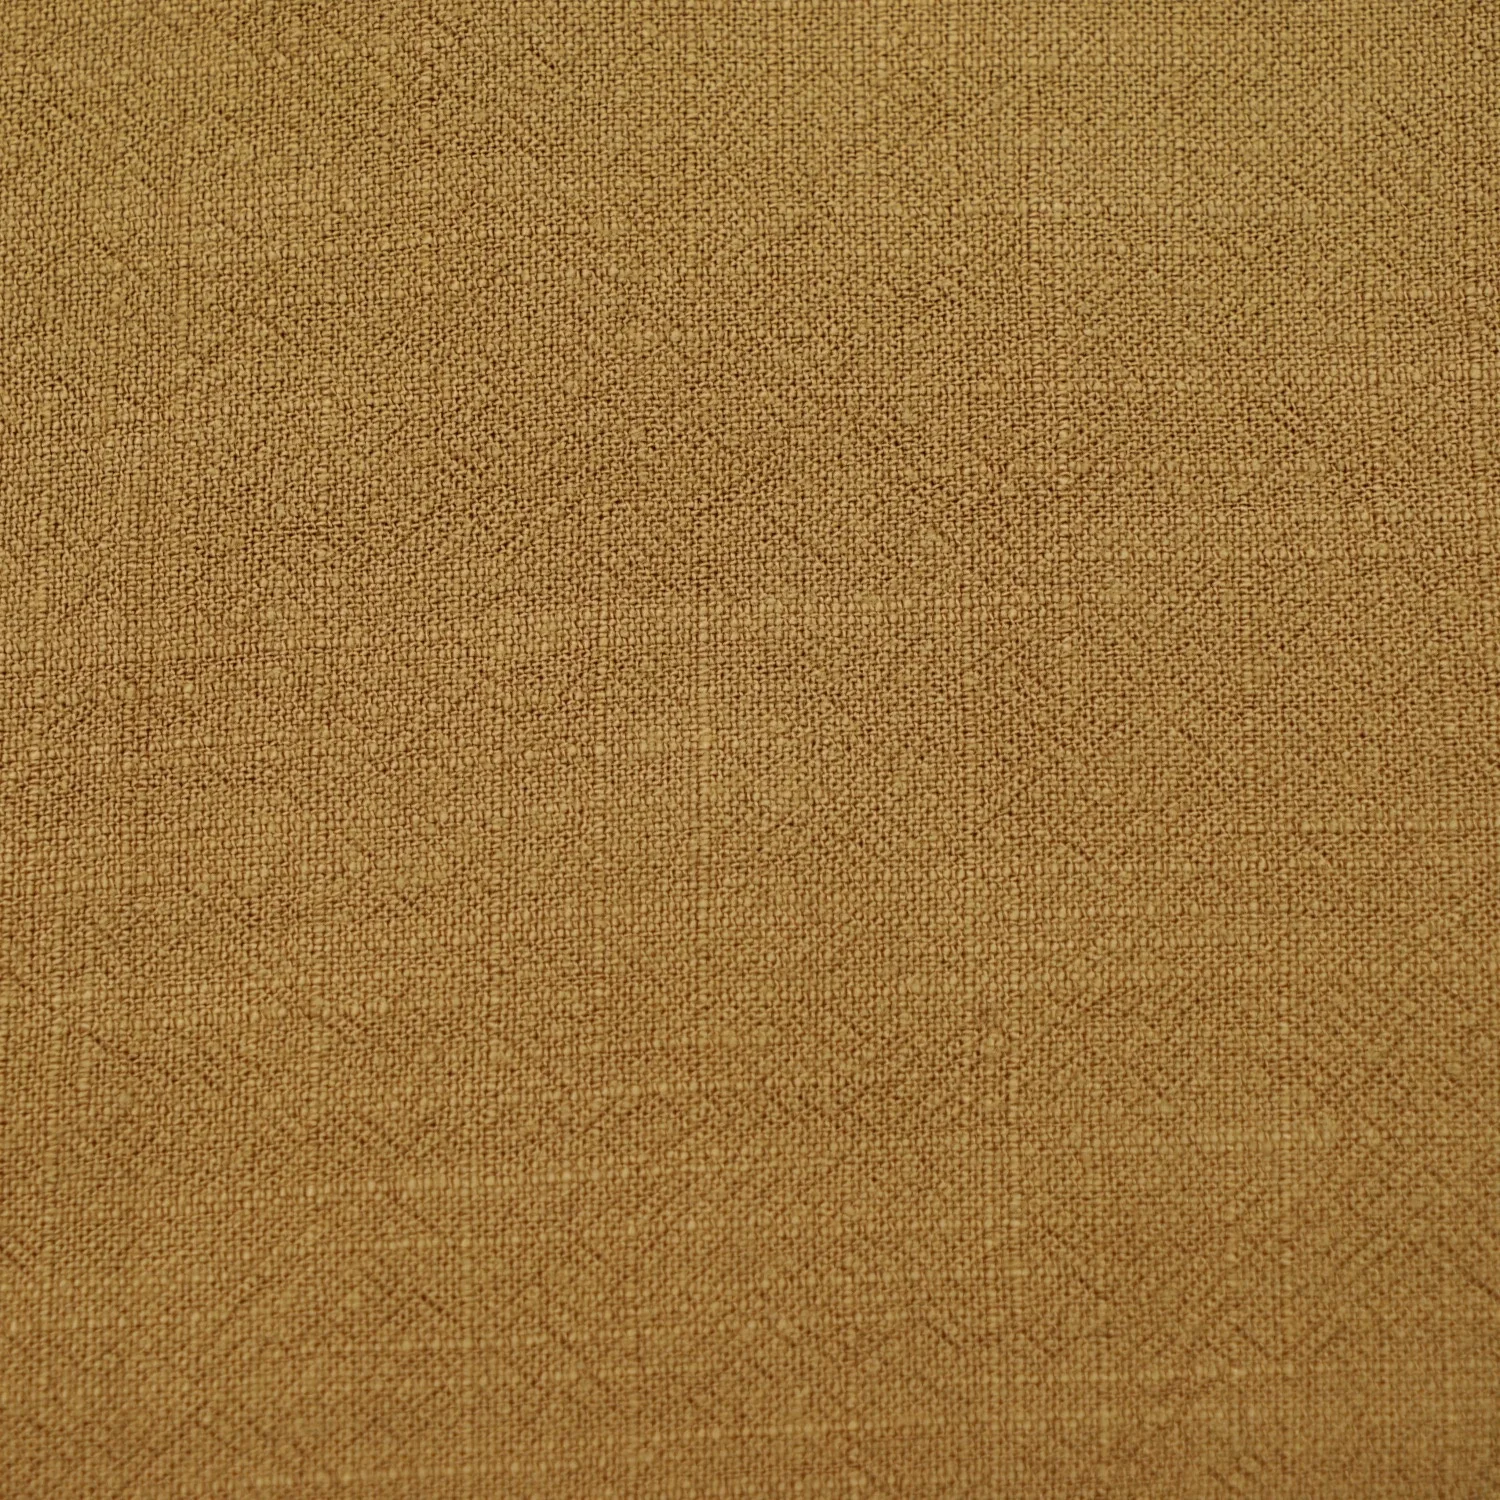 
Slubbed Pattern Weave Stonewashed Linen With Creased Crinkled Effect Linen Viscose Clothing Fabrics With Stone Washing Treatment 